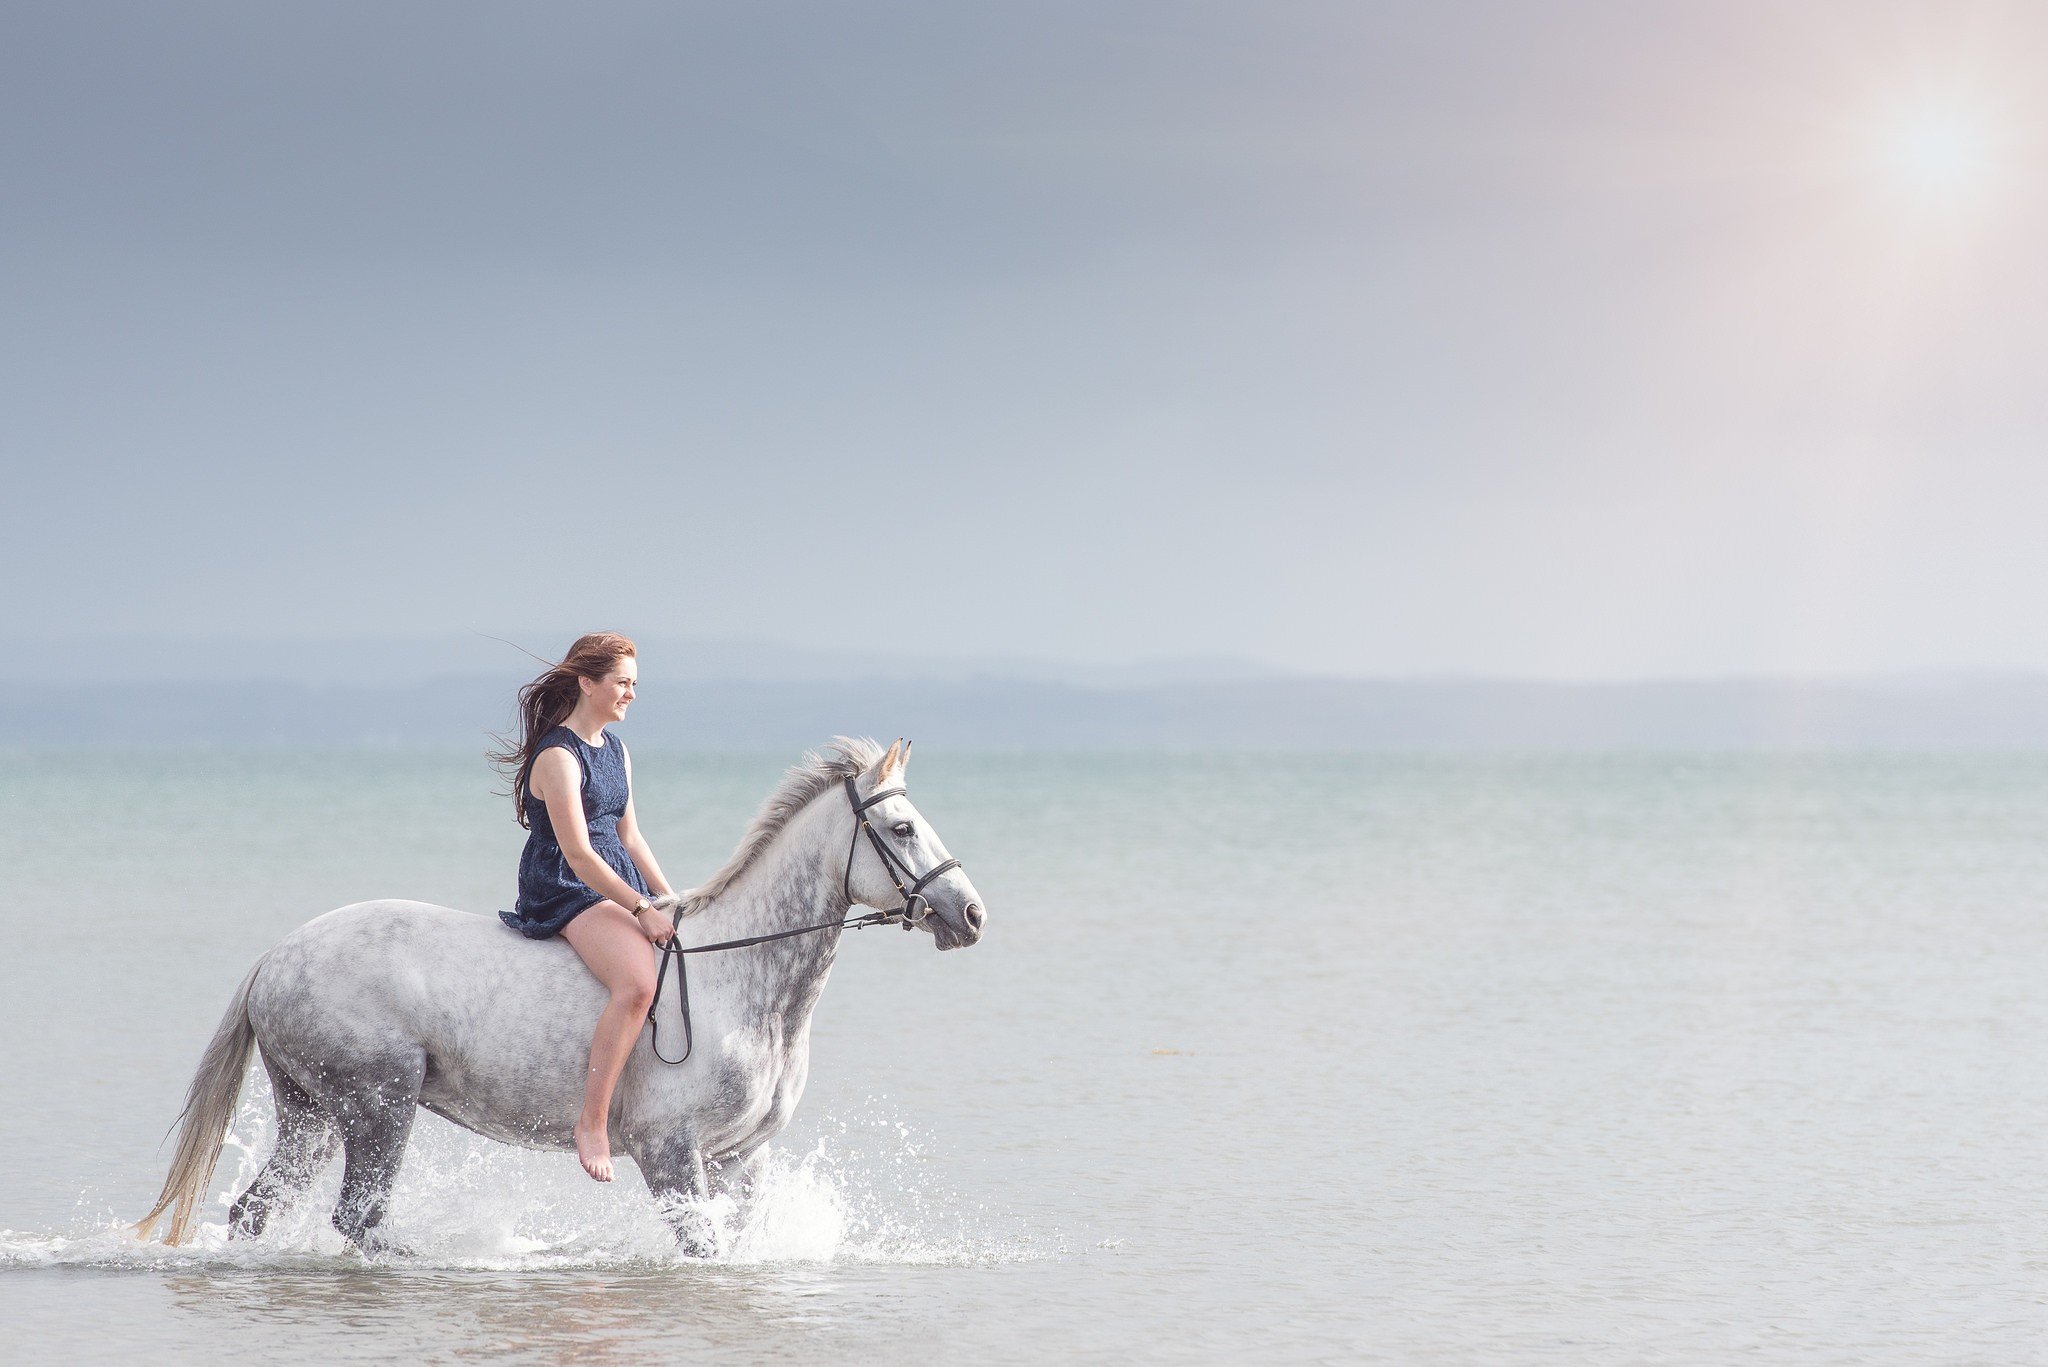 Девушка лошадь клип. Девушка на коне. Фотосессия с лошадью на море. Девушка с лошадью. Девушка на лошади у моря.